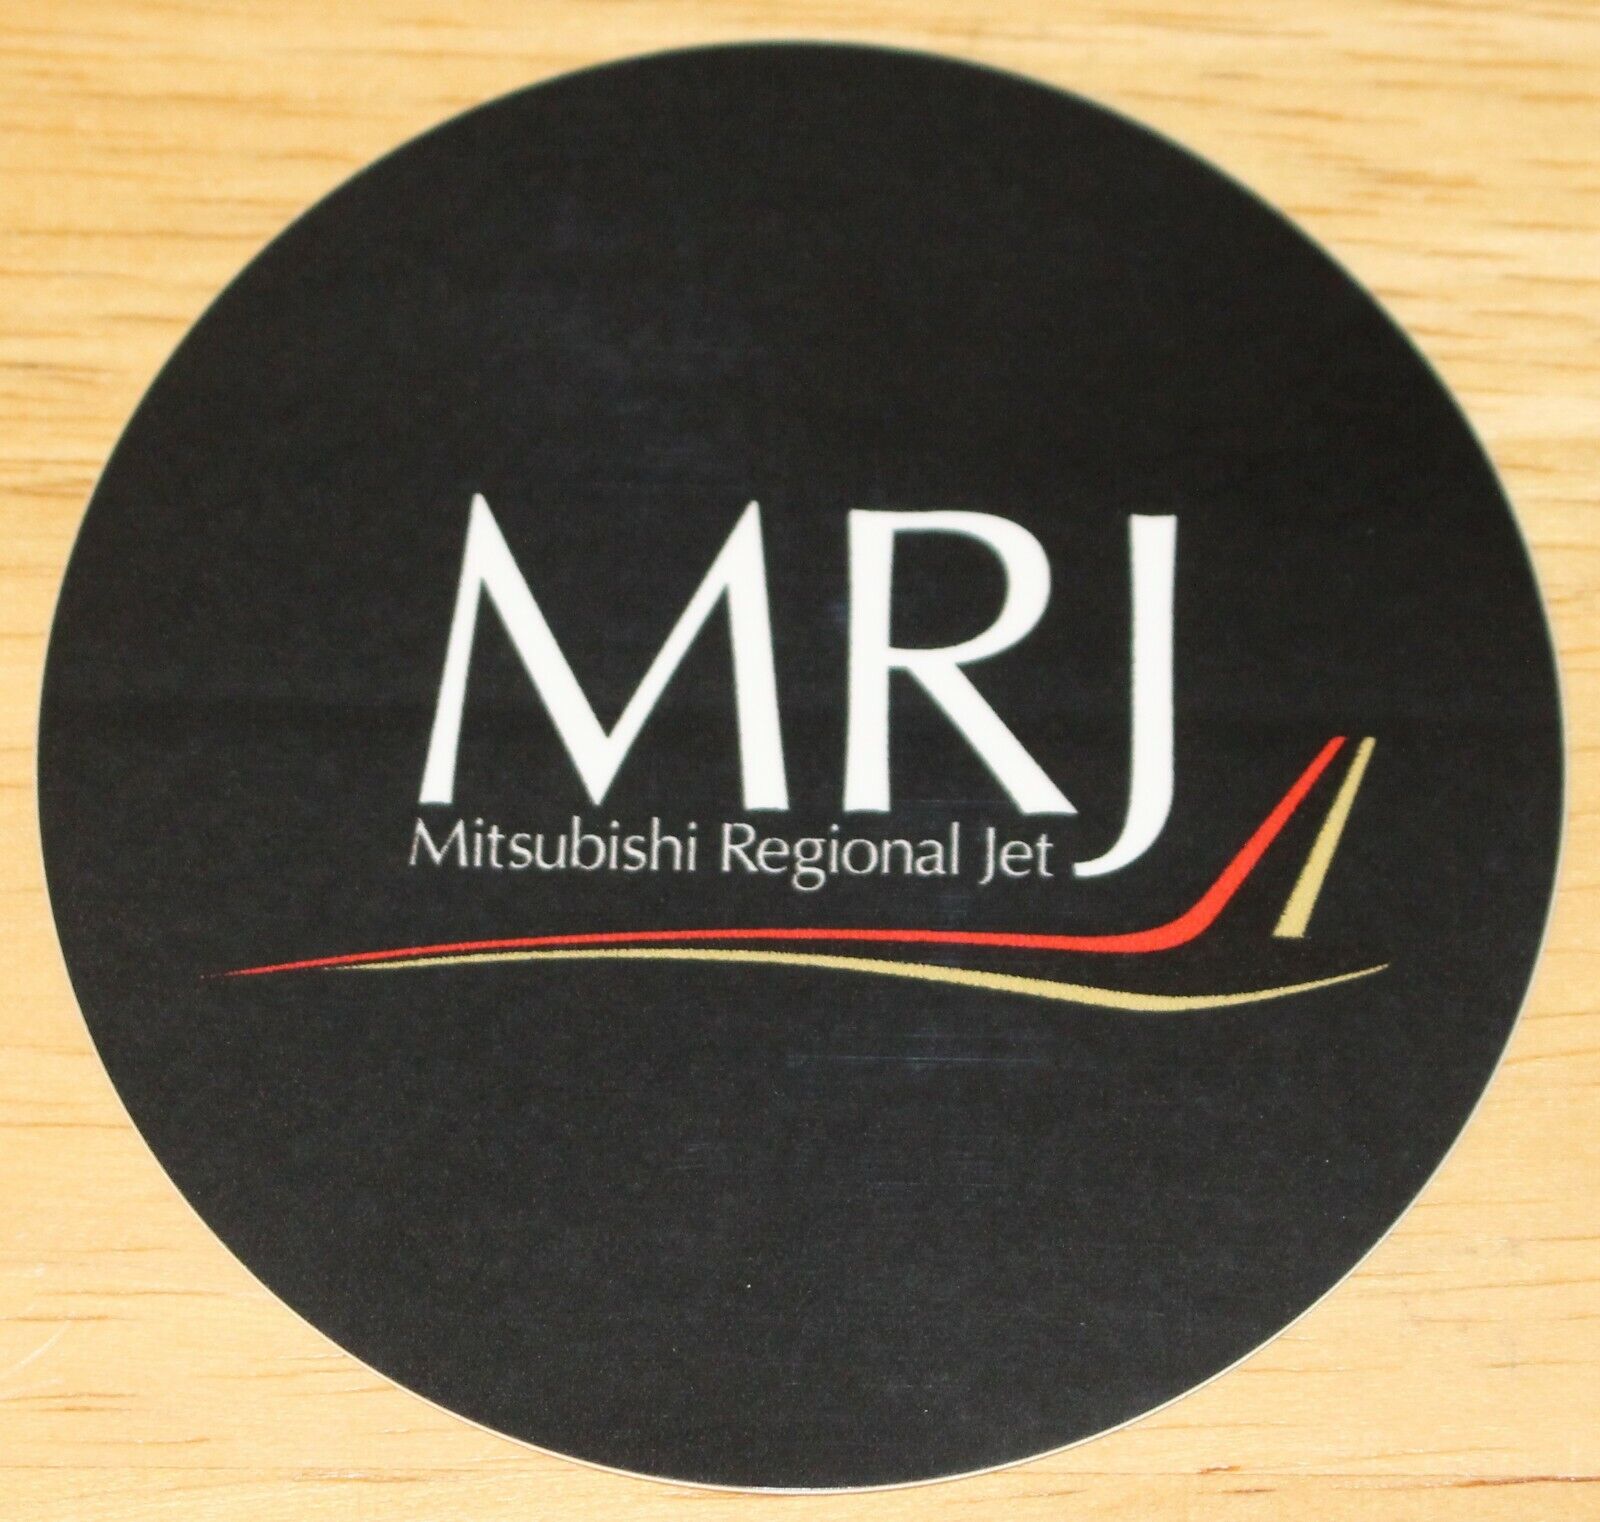 MRJ Mitsubishi Regional Jet Japan (Now named SpaceJet) Sticker Version 1